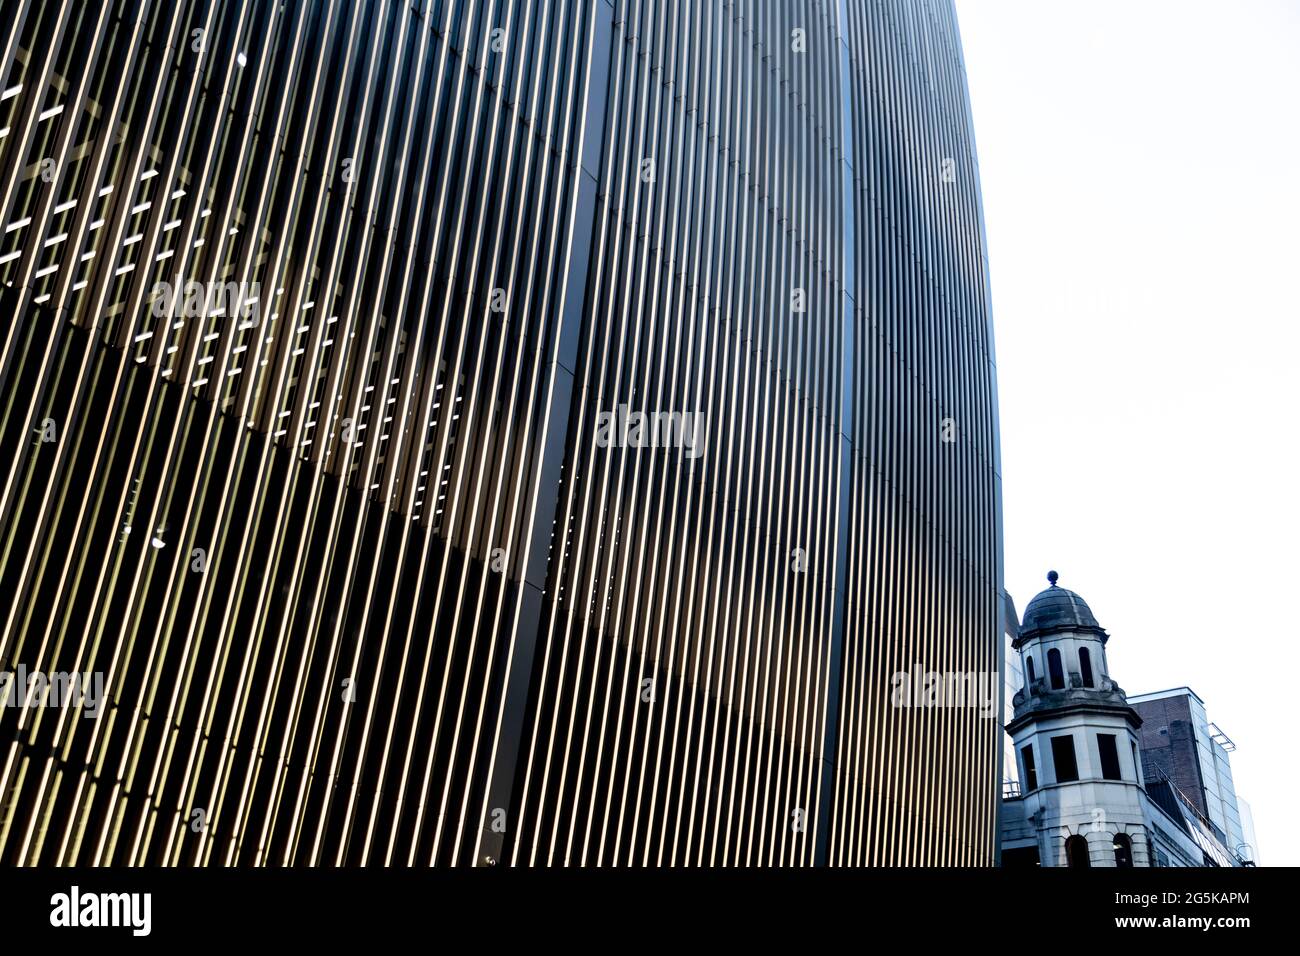 Geschwungene Fassade der 70 St Mary AX (Can of Ham) entlang der Bevis Marks Street in der City of London, Großbritannien Stockfoto